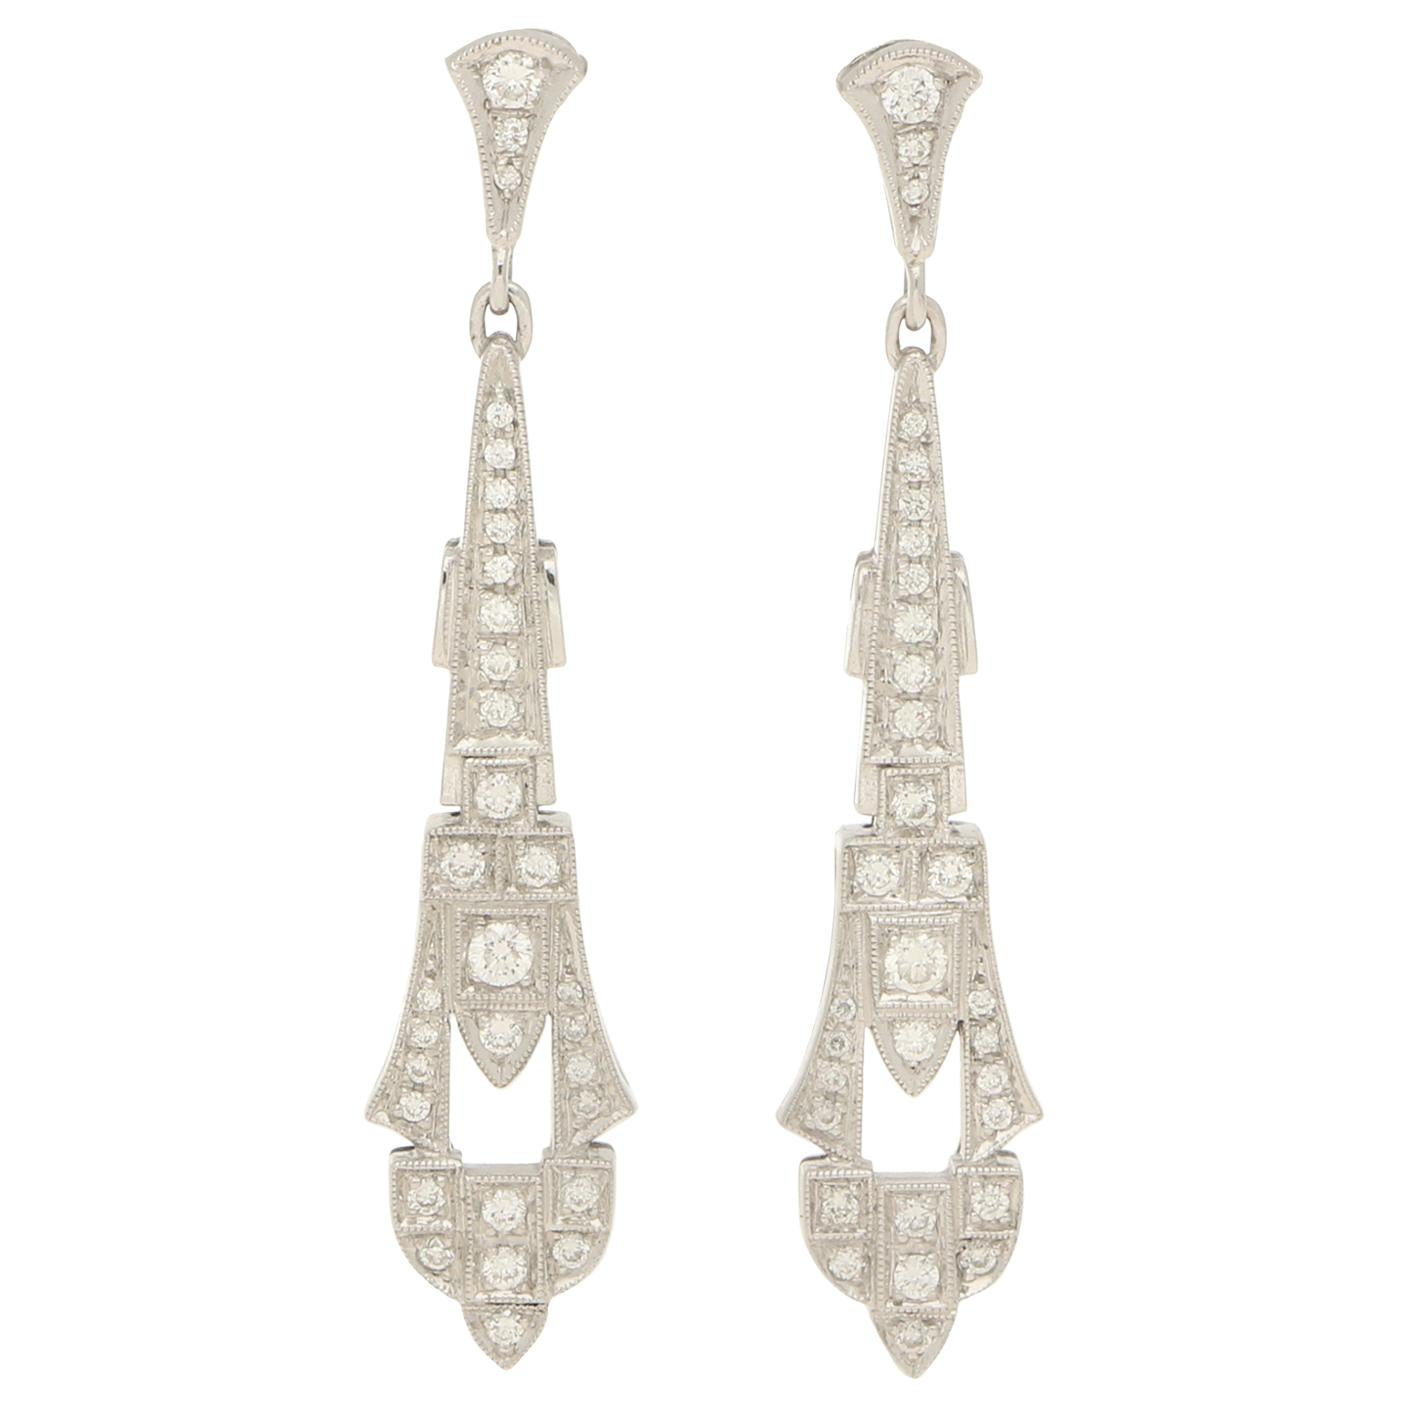 Art Deco Inspired Diamond Drop Earrings in 18 Karat White Gold